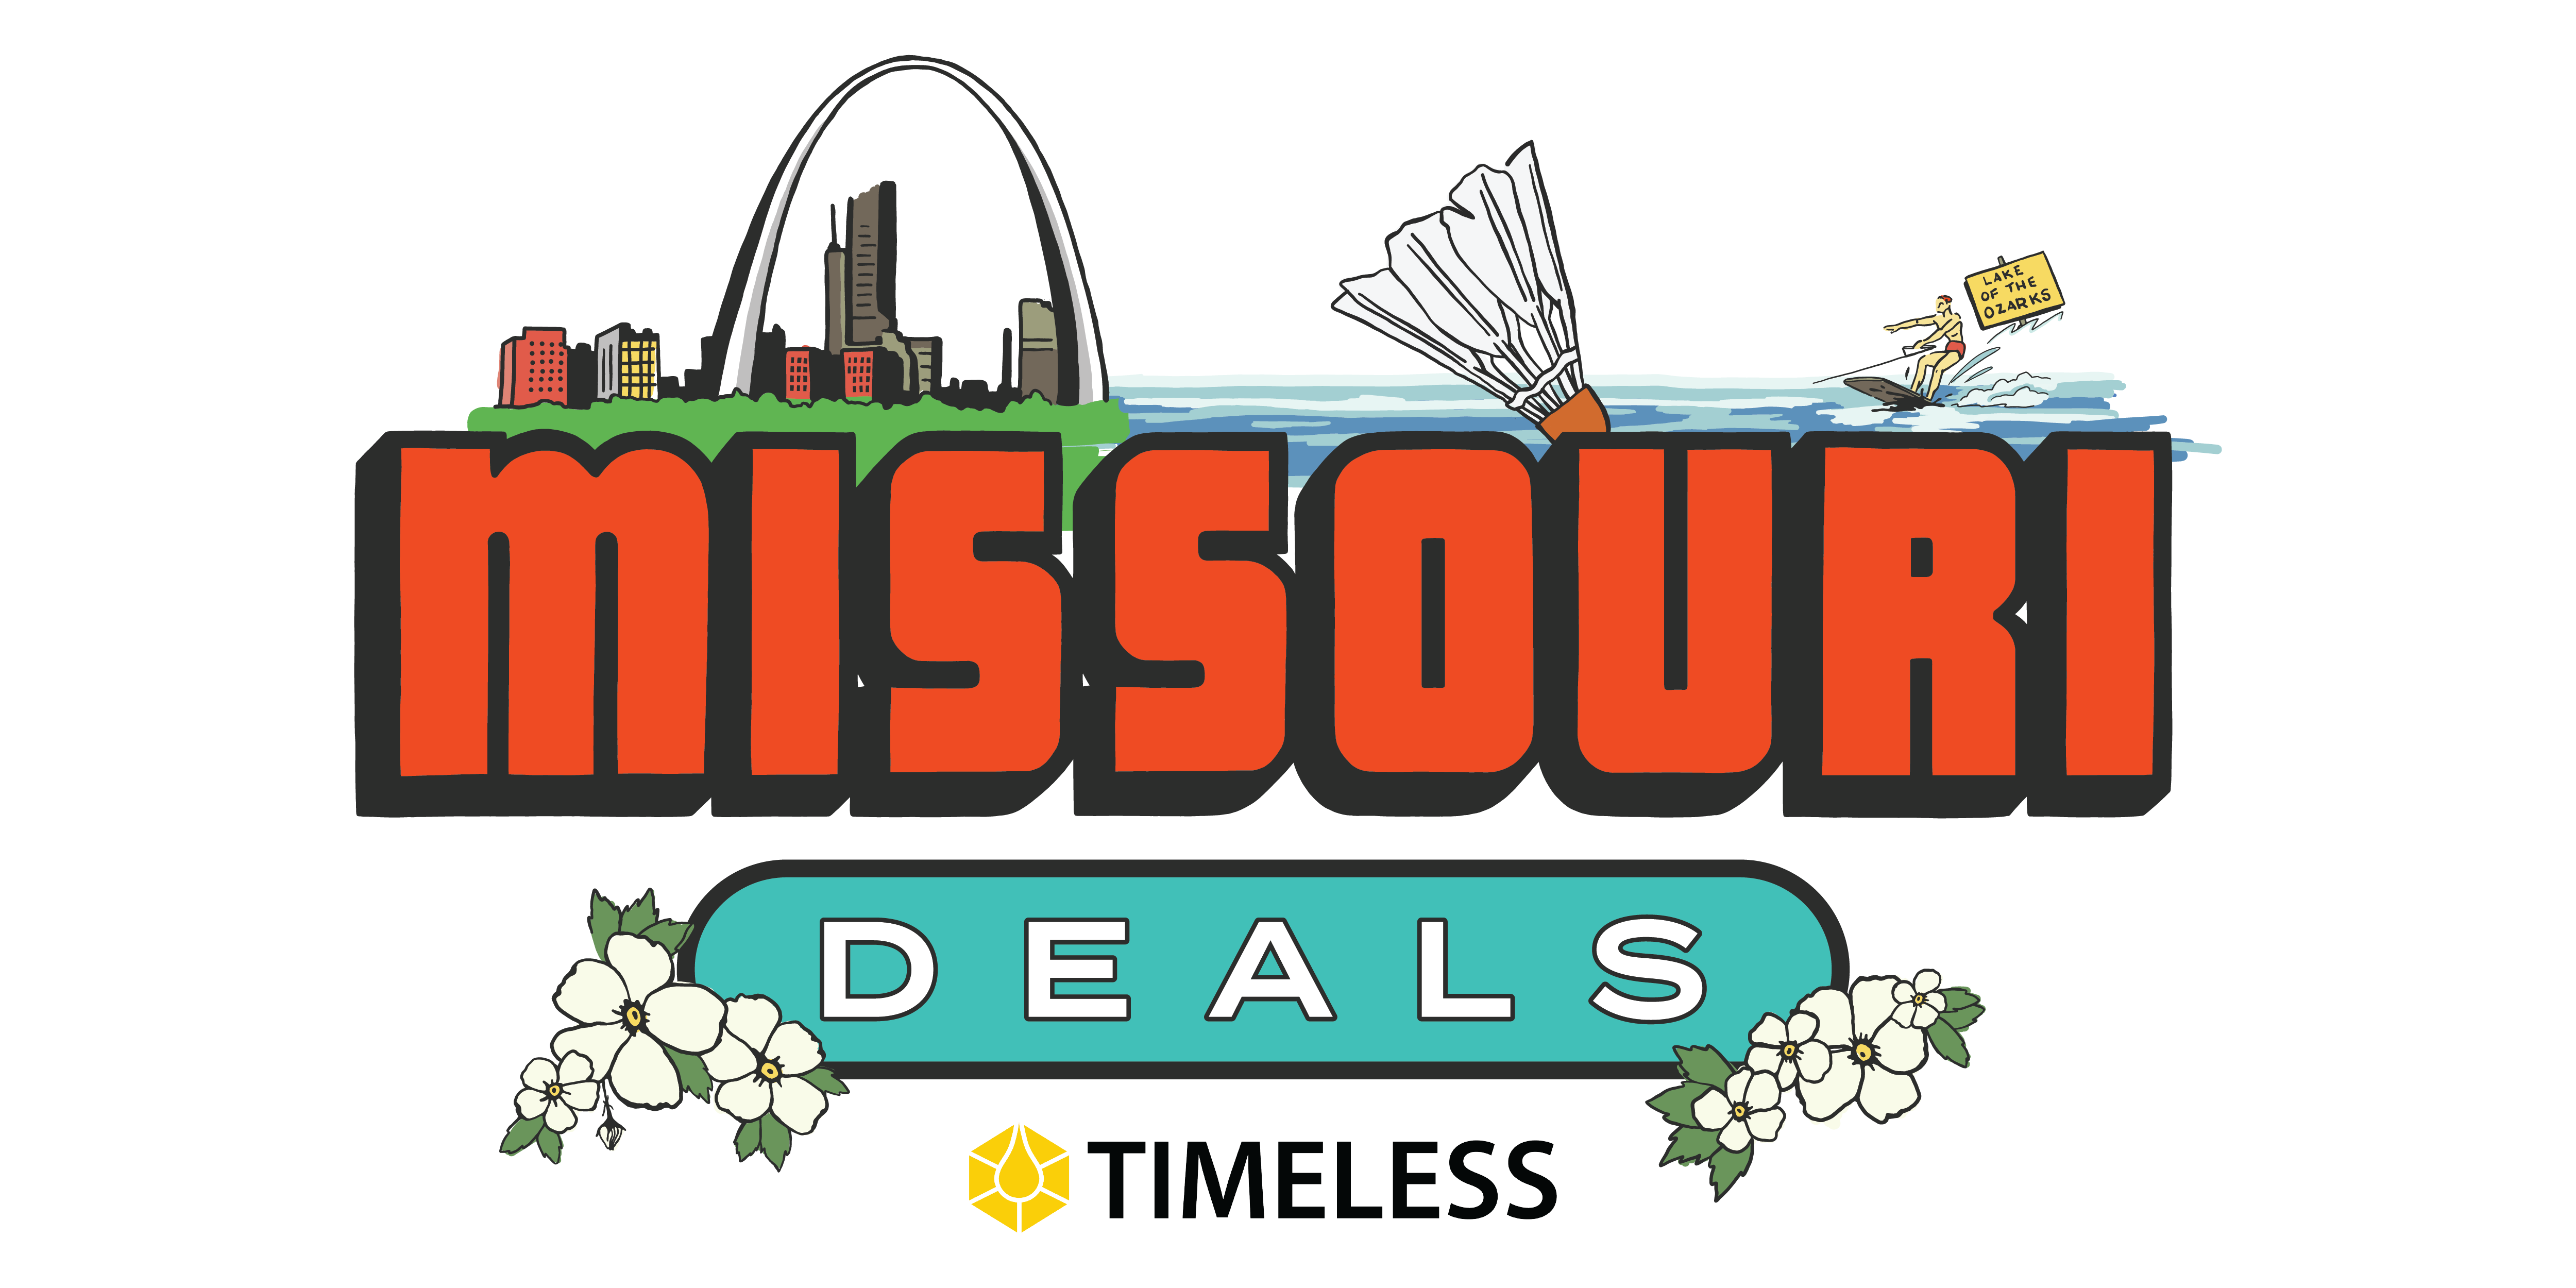 Timeless Deals in Missouri